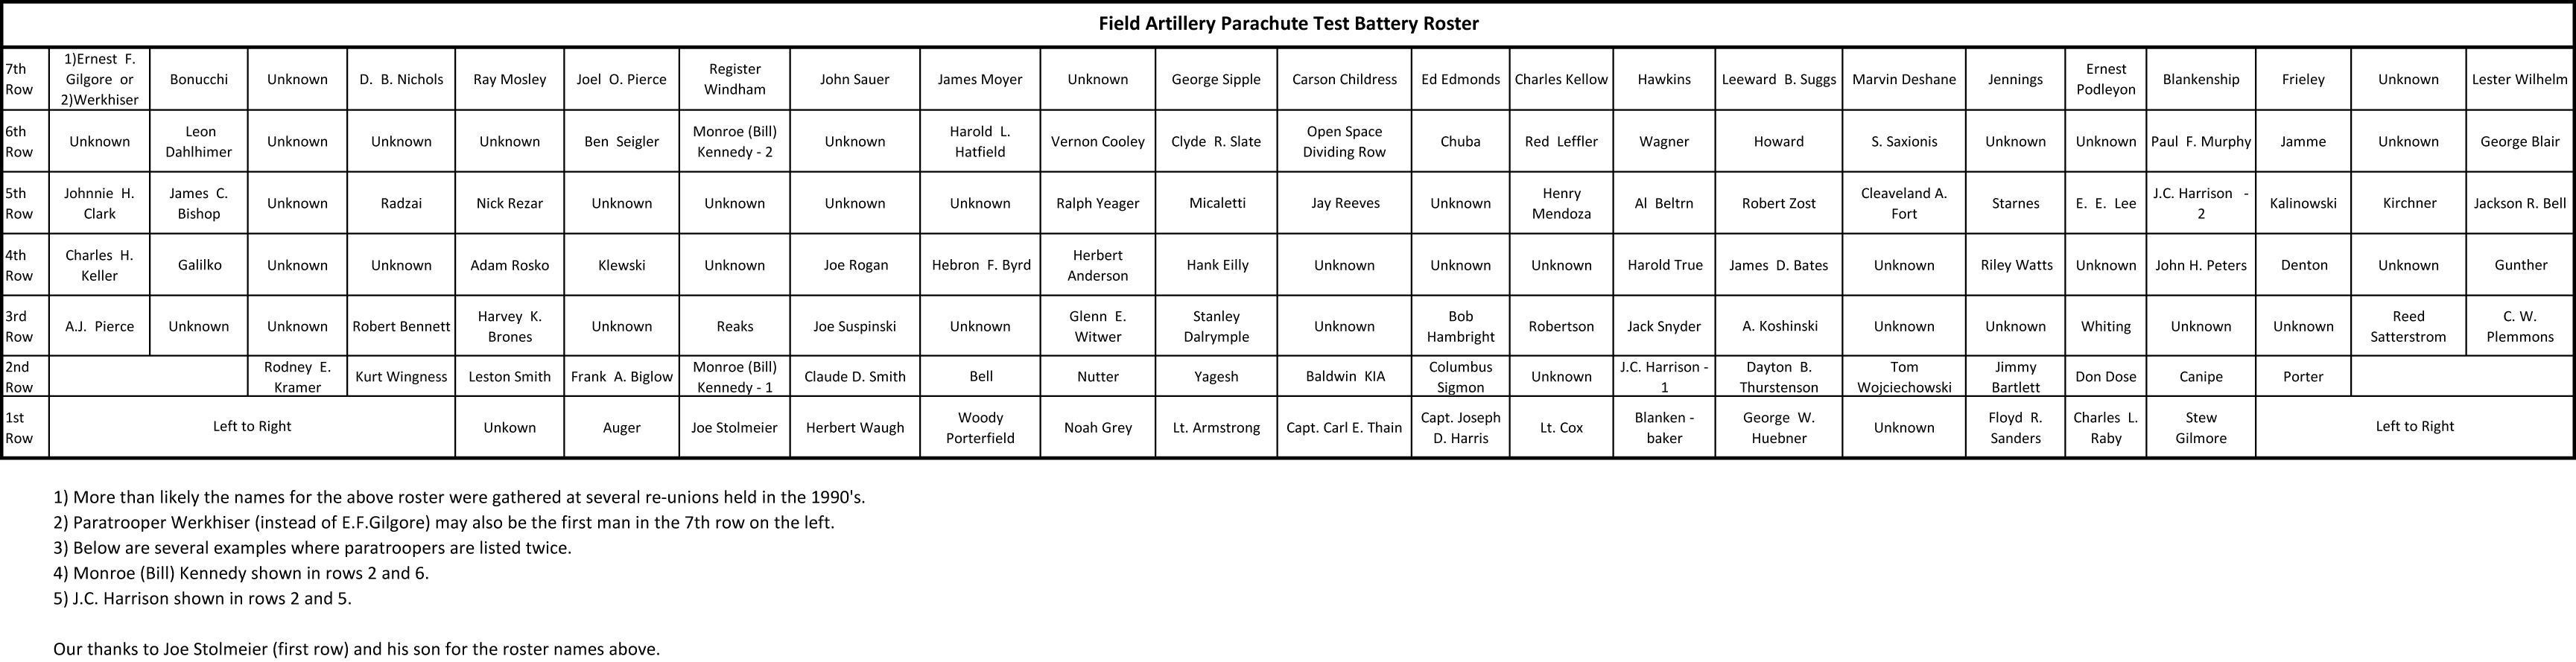 456PFA test Battery photo roster